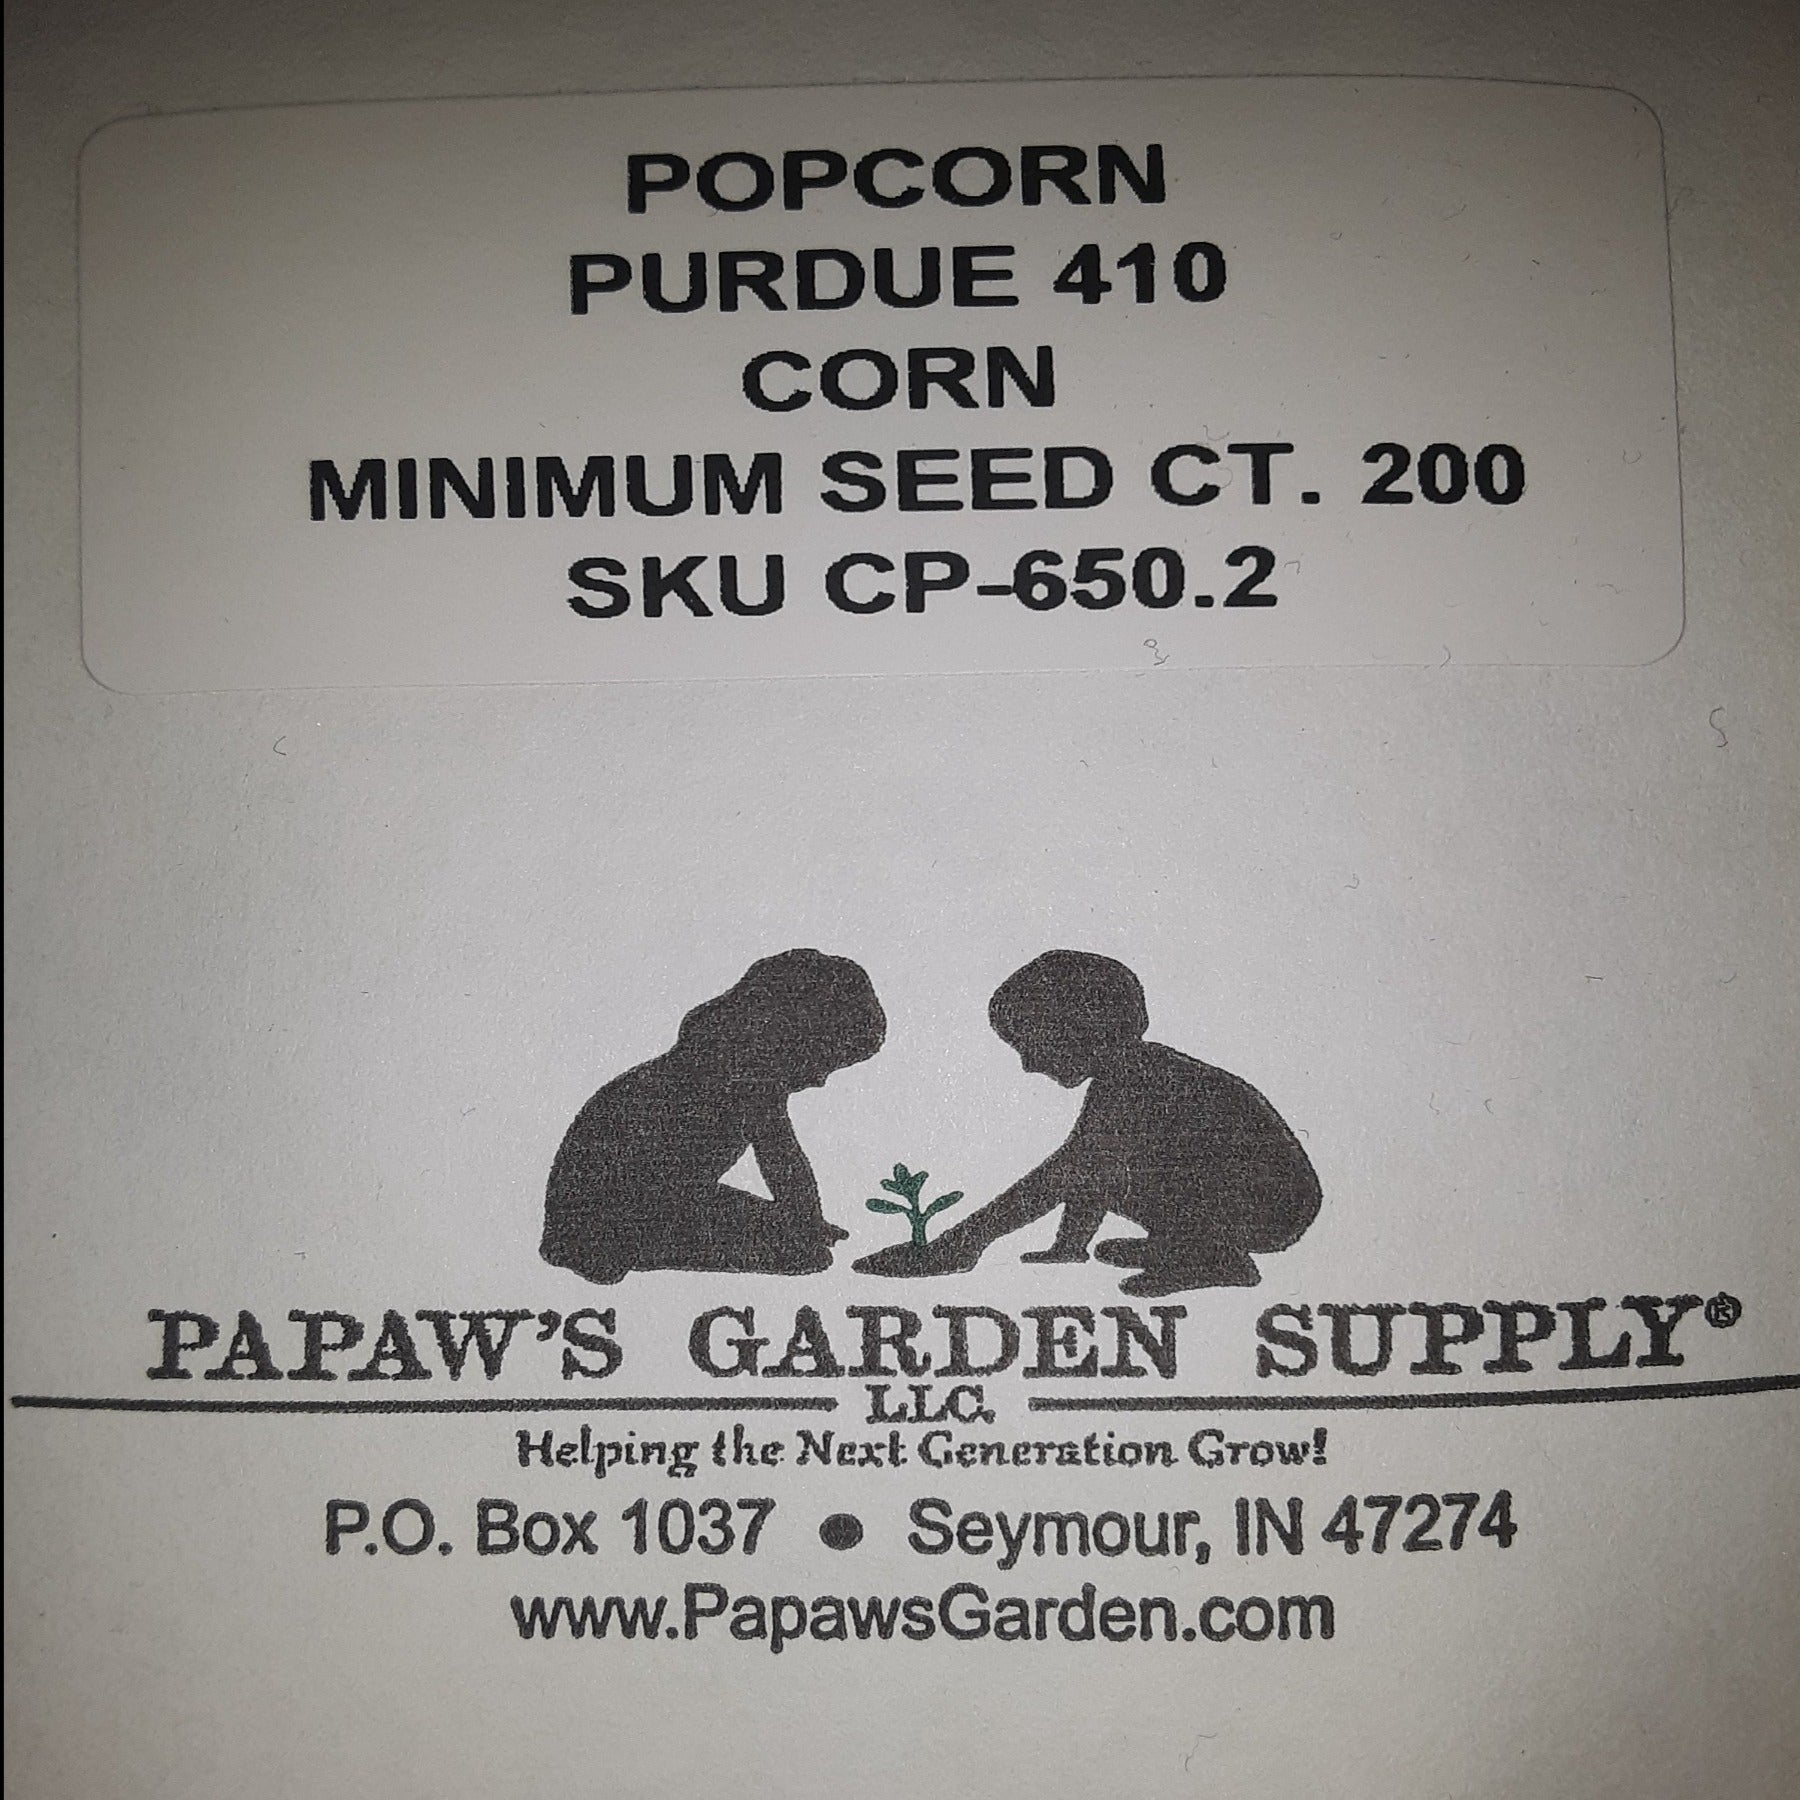 Purdue 410 Yellow Popcorn Untreated Seeds